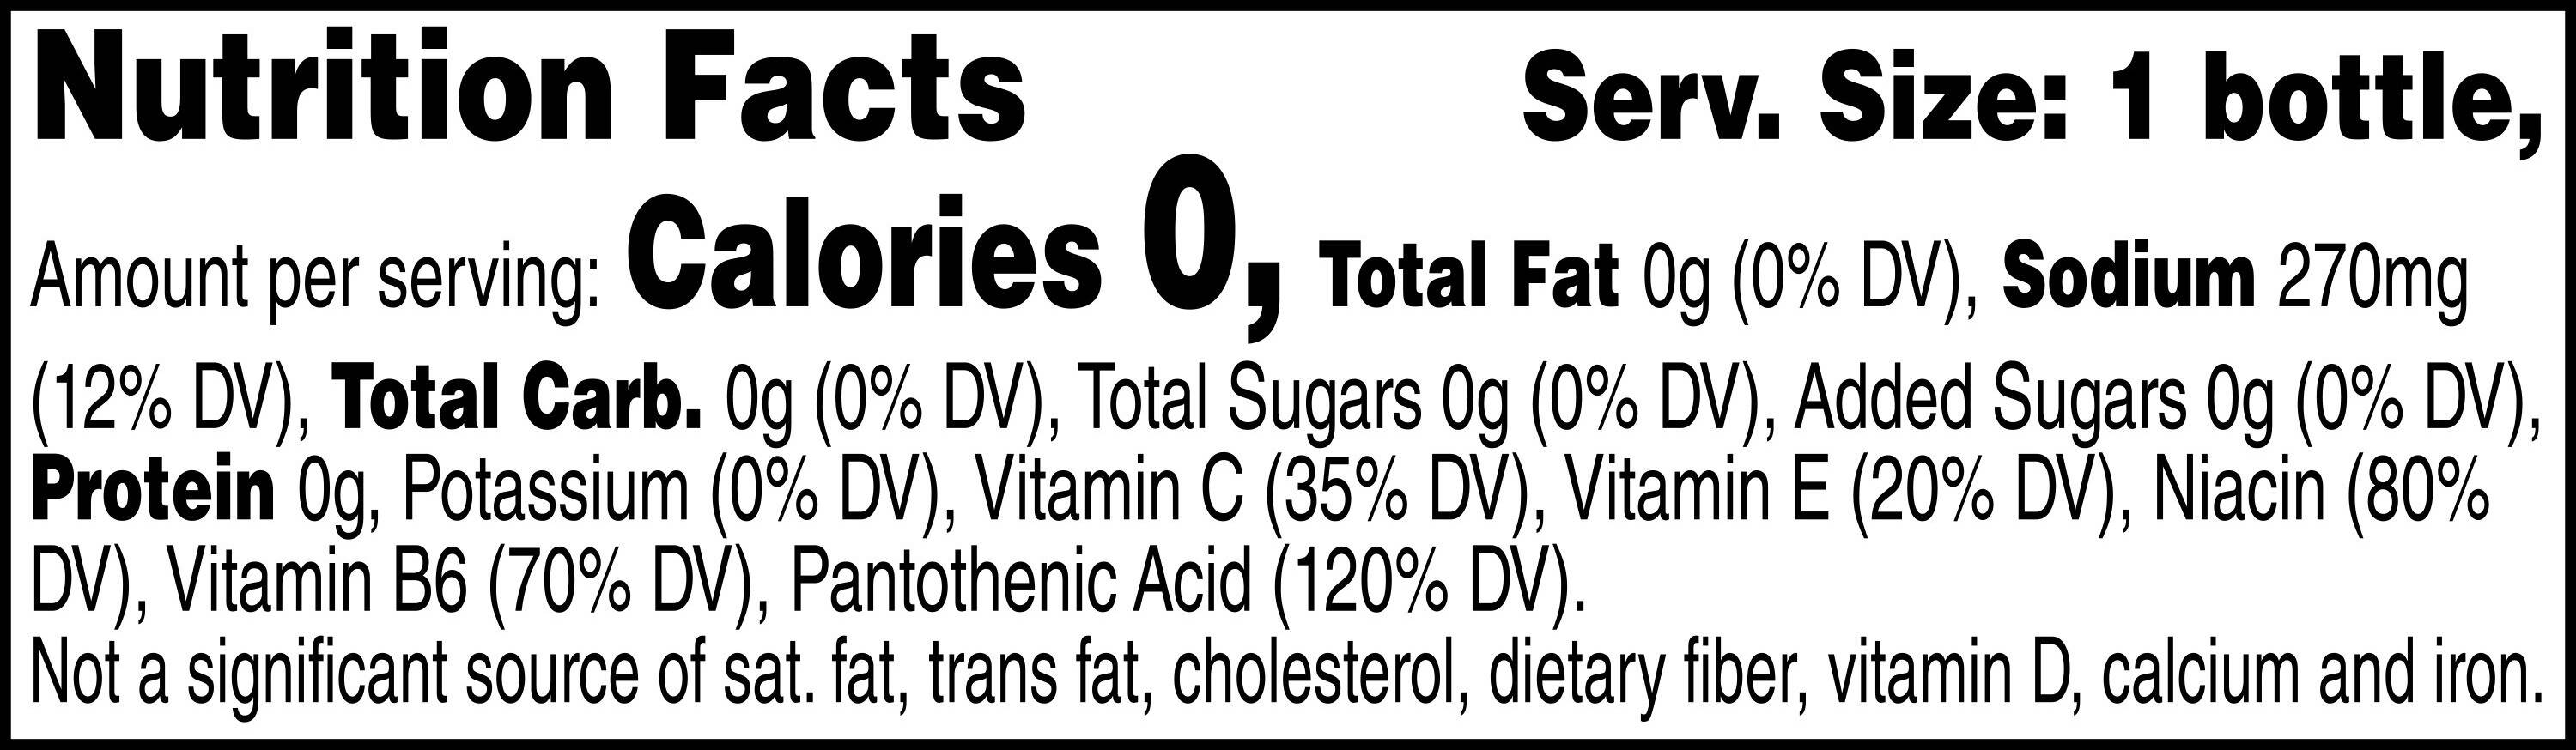 Image describing nutrition information for product Propel Strawberry Lemonade